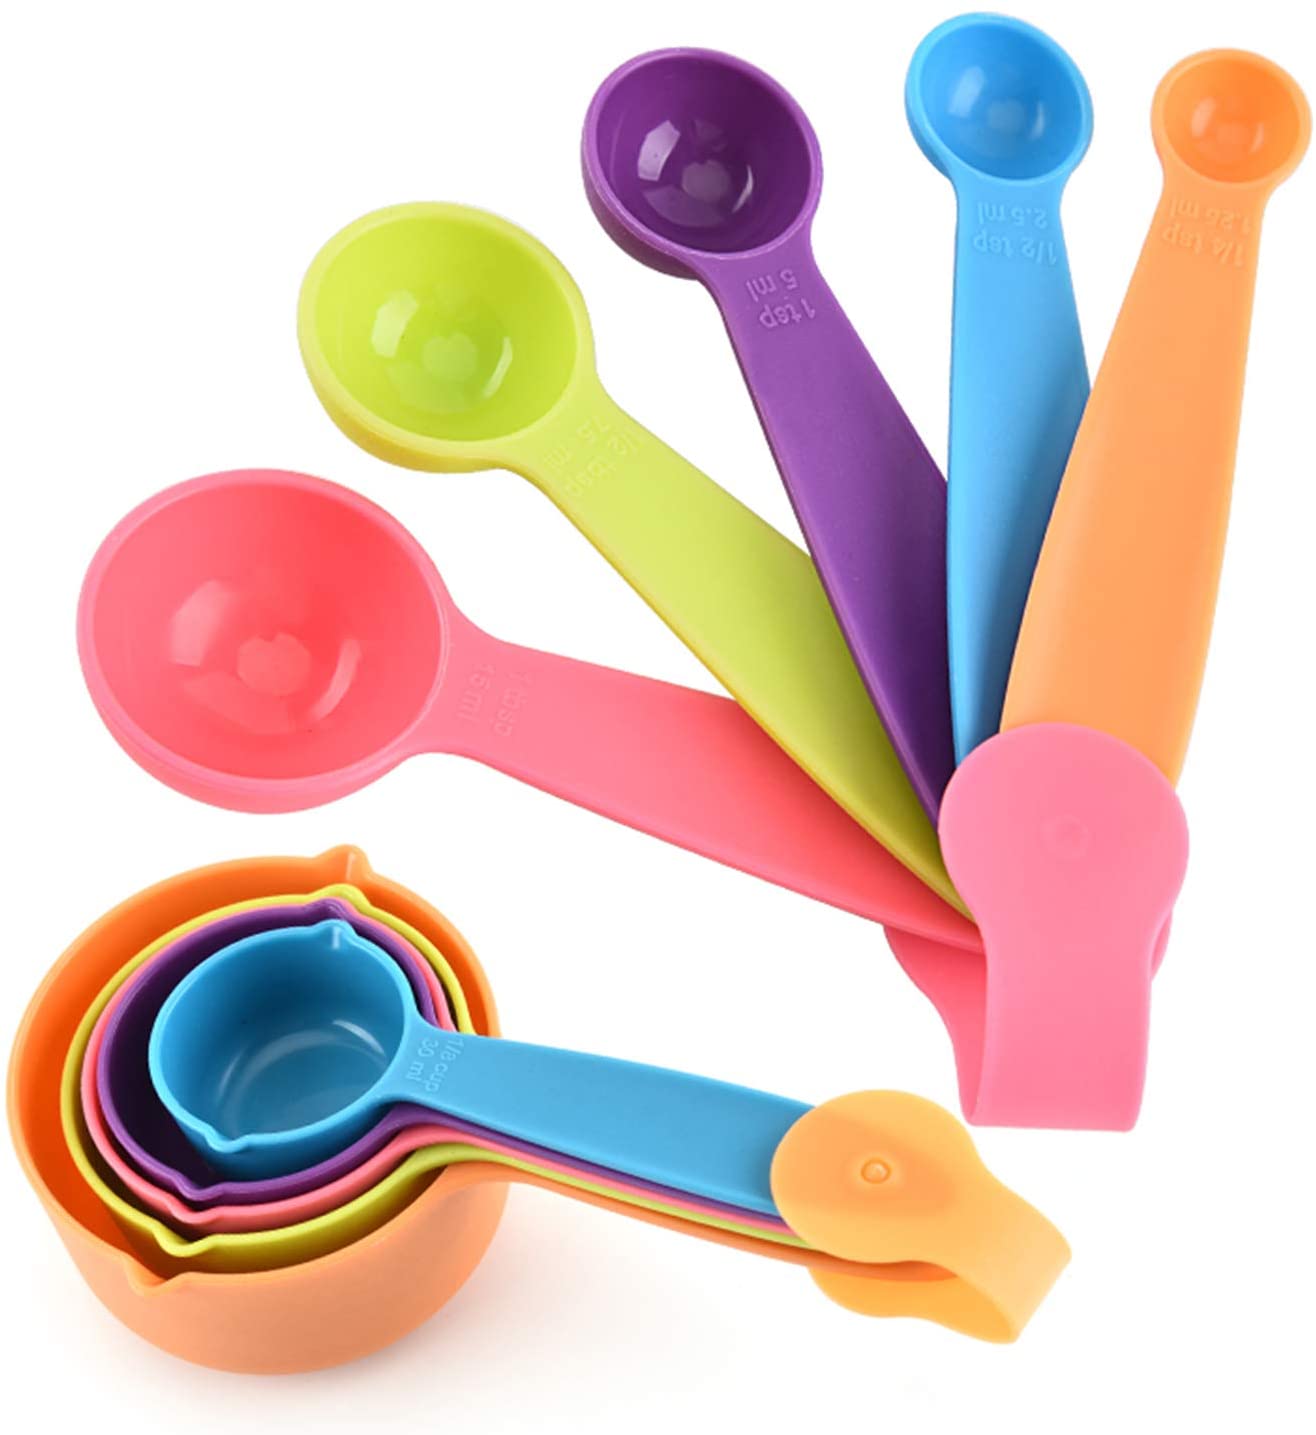 10pcs/set Random Color Measuring Spoon, Simple Measuring Cup For Baking